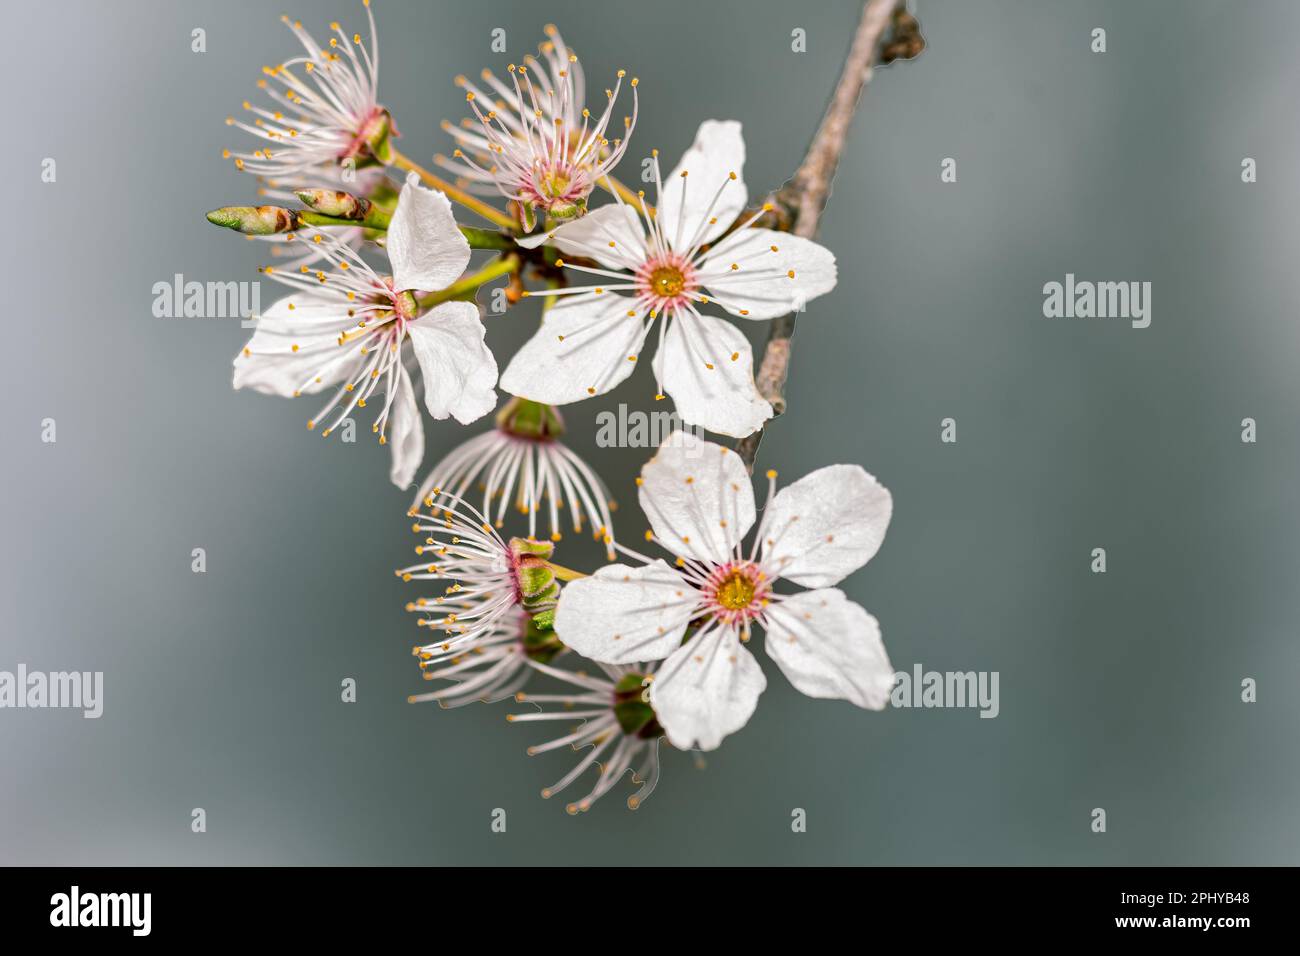 Ein Meer aus zarten Blüten: Die Mirabellenpracht verzaubert im Frühling Banque D'Images